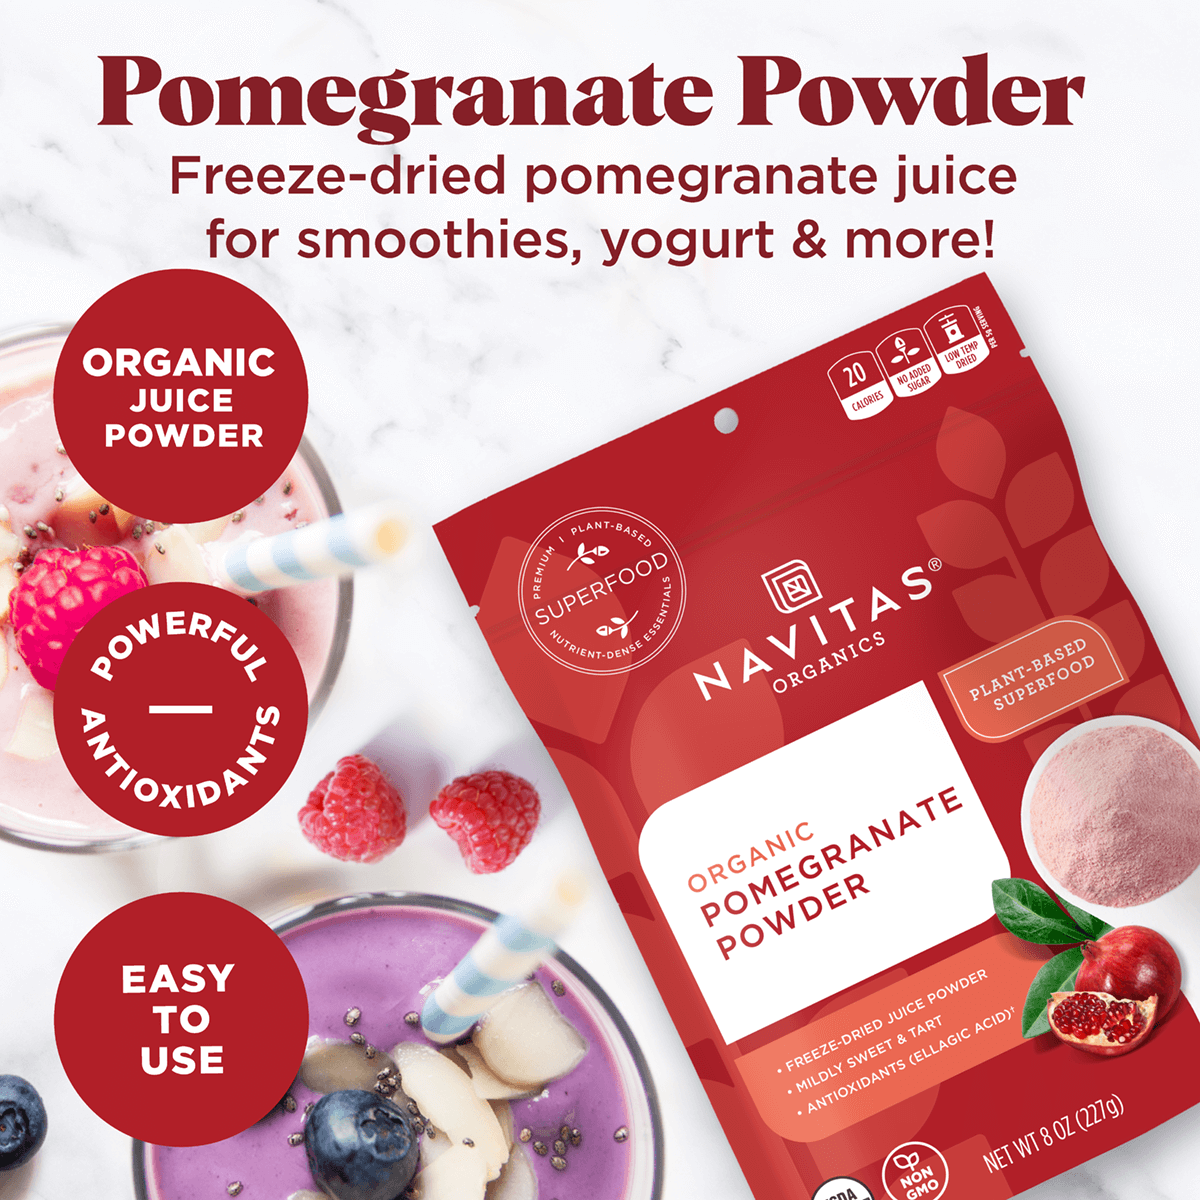 Pomegranate Powder. Freeze-dried pomegranate juice for smoothies, yogurt & more! Organic juice powder. Powerful antioxidants. Easy to use. Package of Navitas Organics Pomegranate Powder.